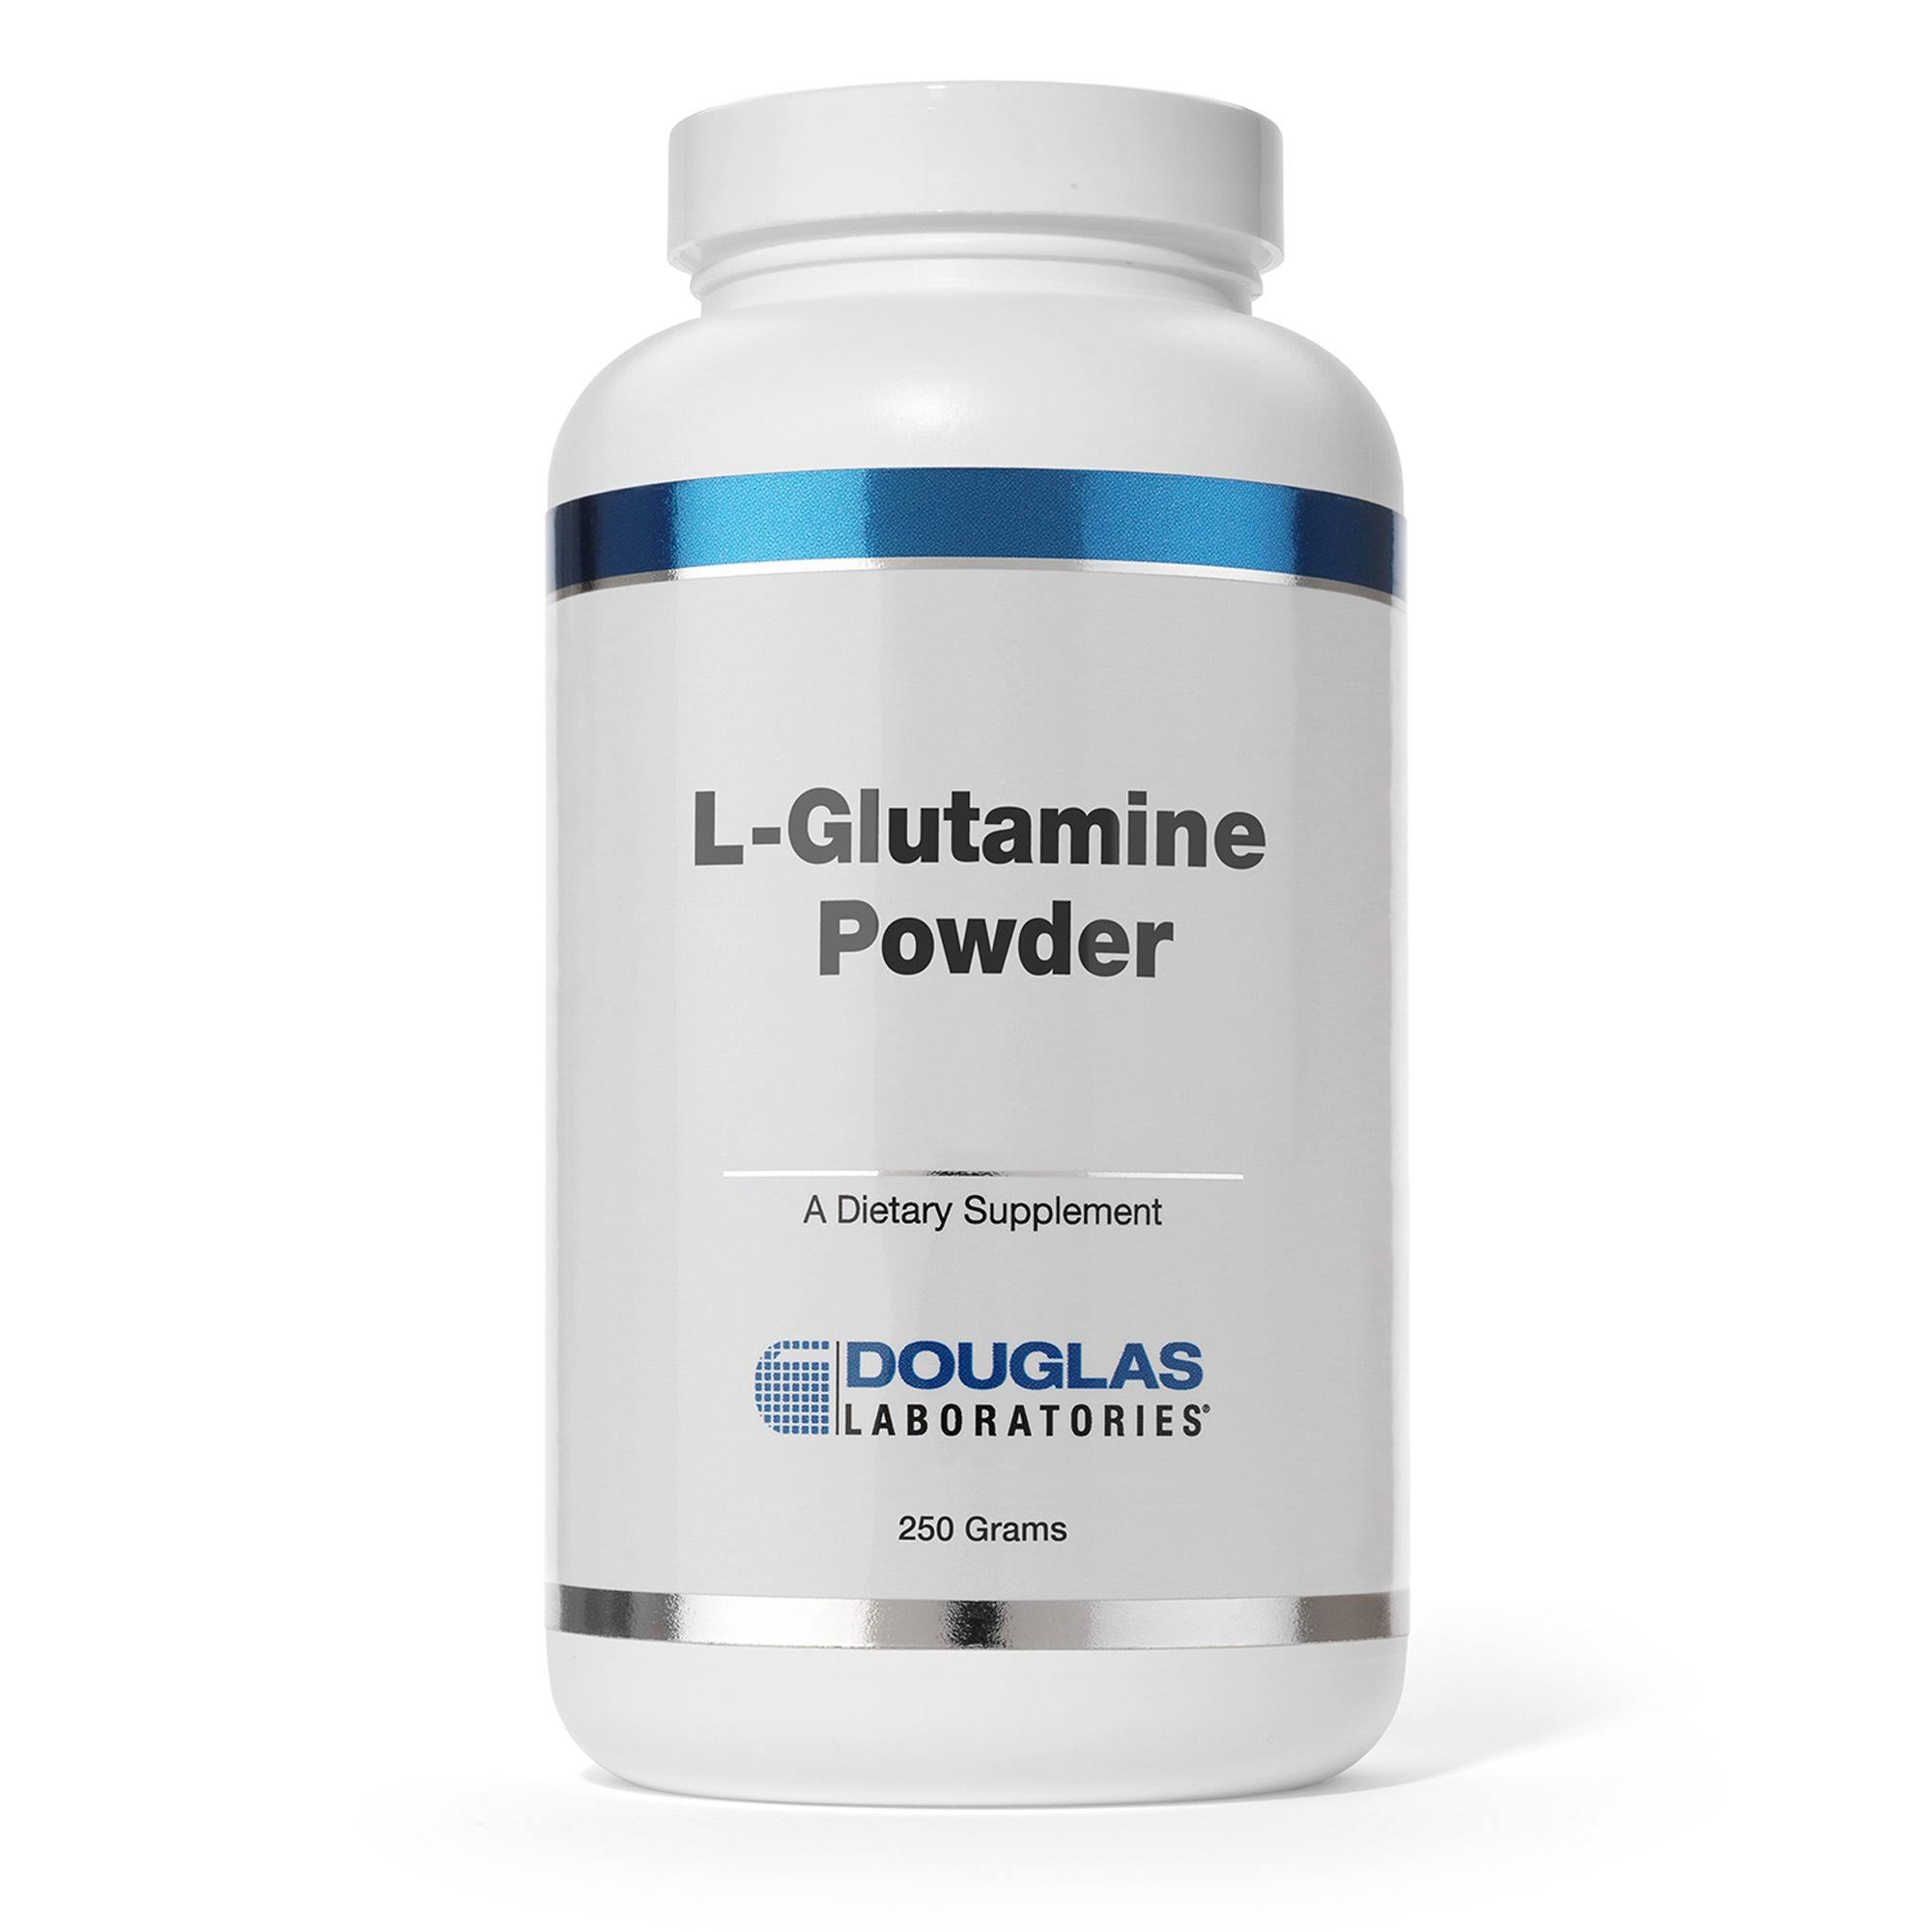 Douglas Laboratories L-Glutamine Powder 250 Grams